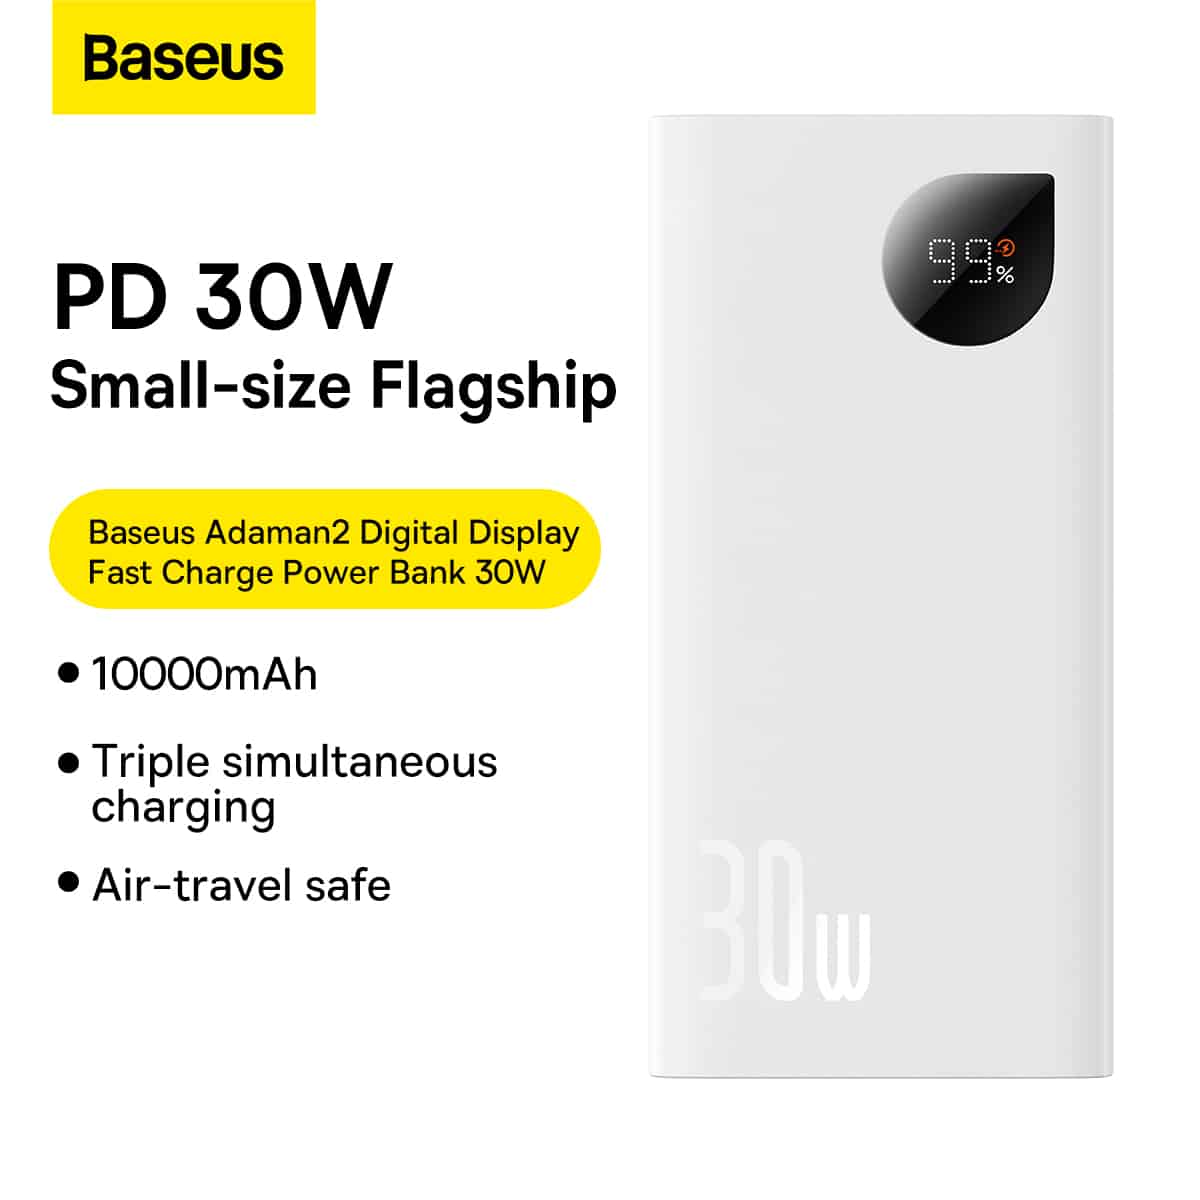 Baseus Adaman 2 Digital Display 30W 10000mAh Power Bank | Celltronics.lk